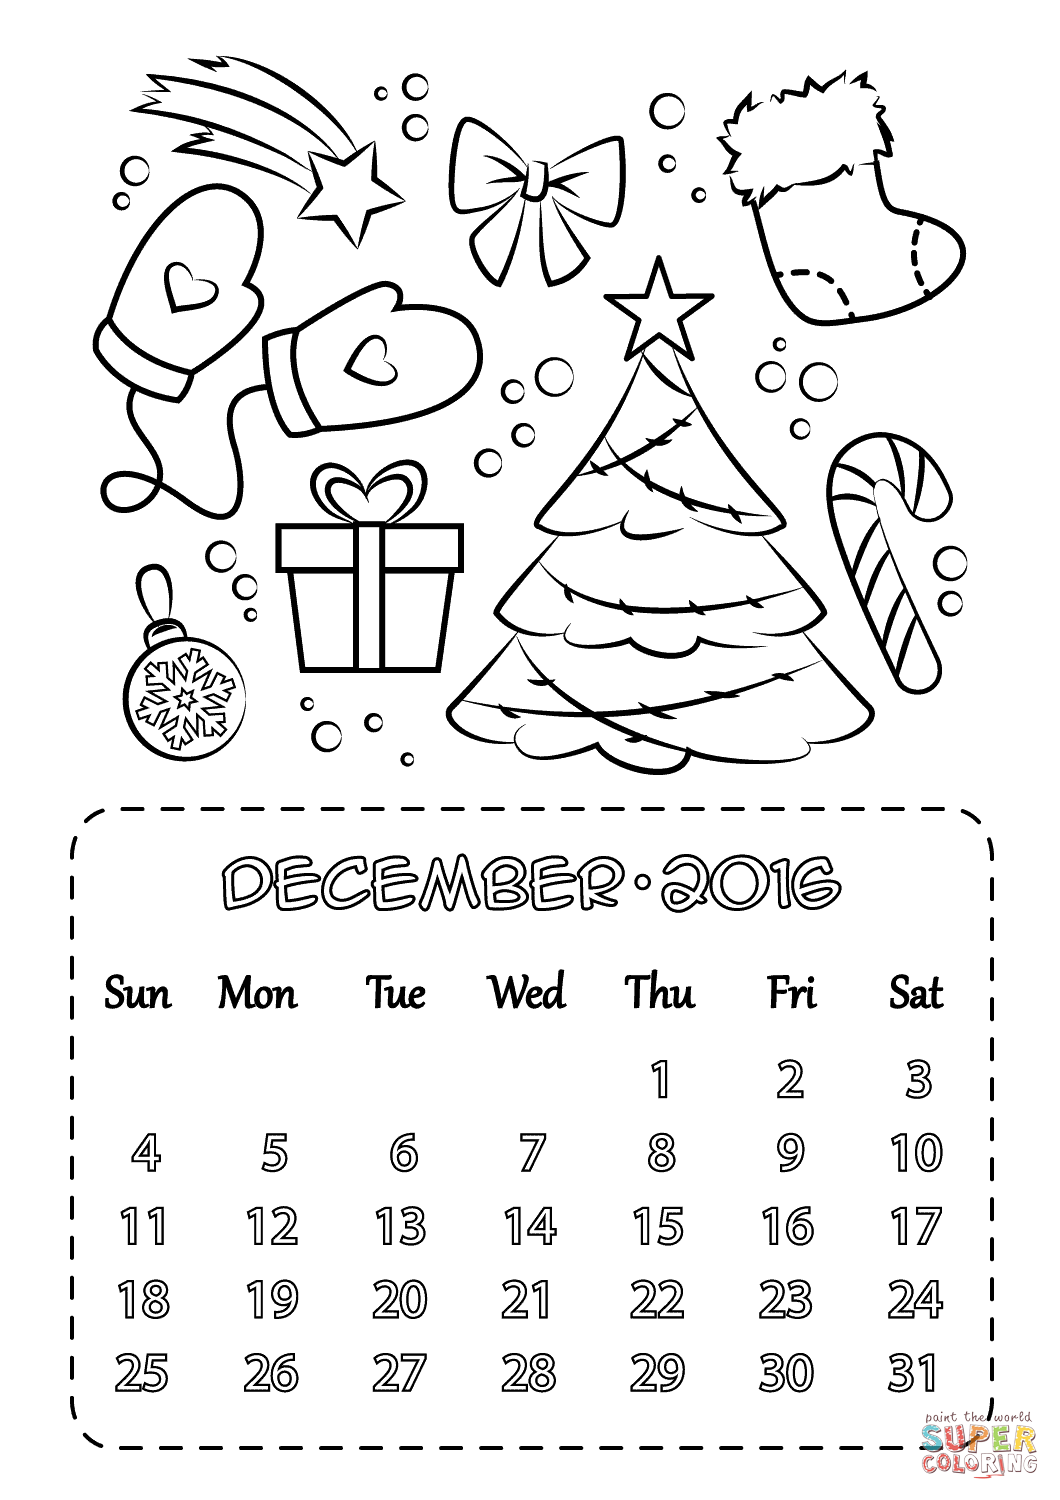 Calendar Coloring Pages at GetColorings.com | Free printable colorings ...